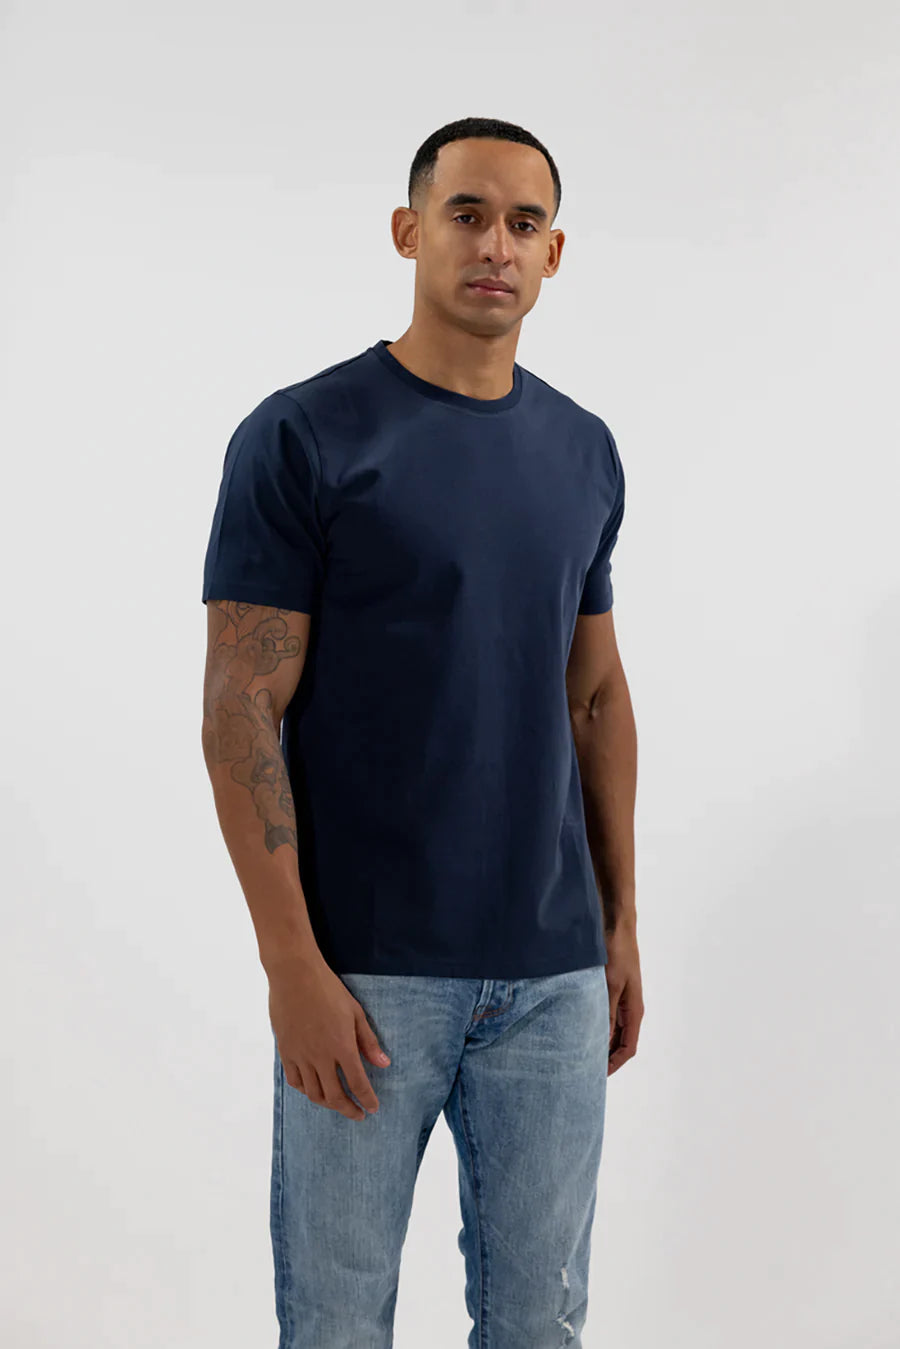 Easy Mondays Crew Neck Cotton T-Shirt-Men&#39;s T-Shirts-navy-S-Yaletown-Vancouver-Surrey-Canada